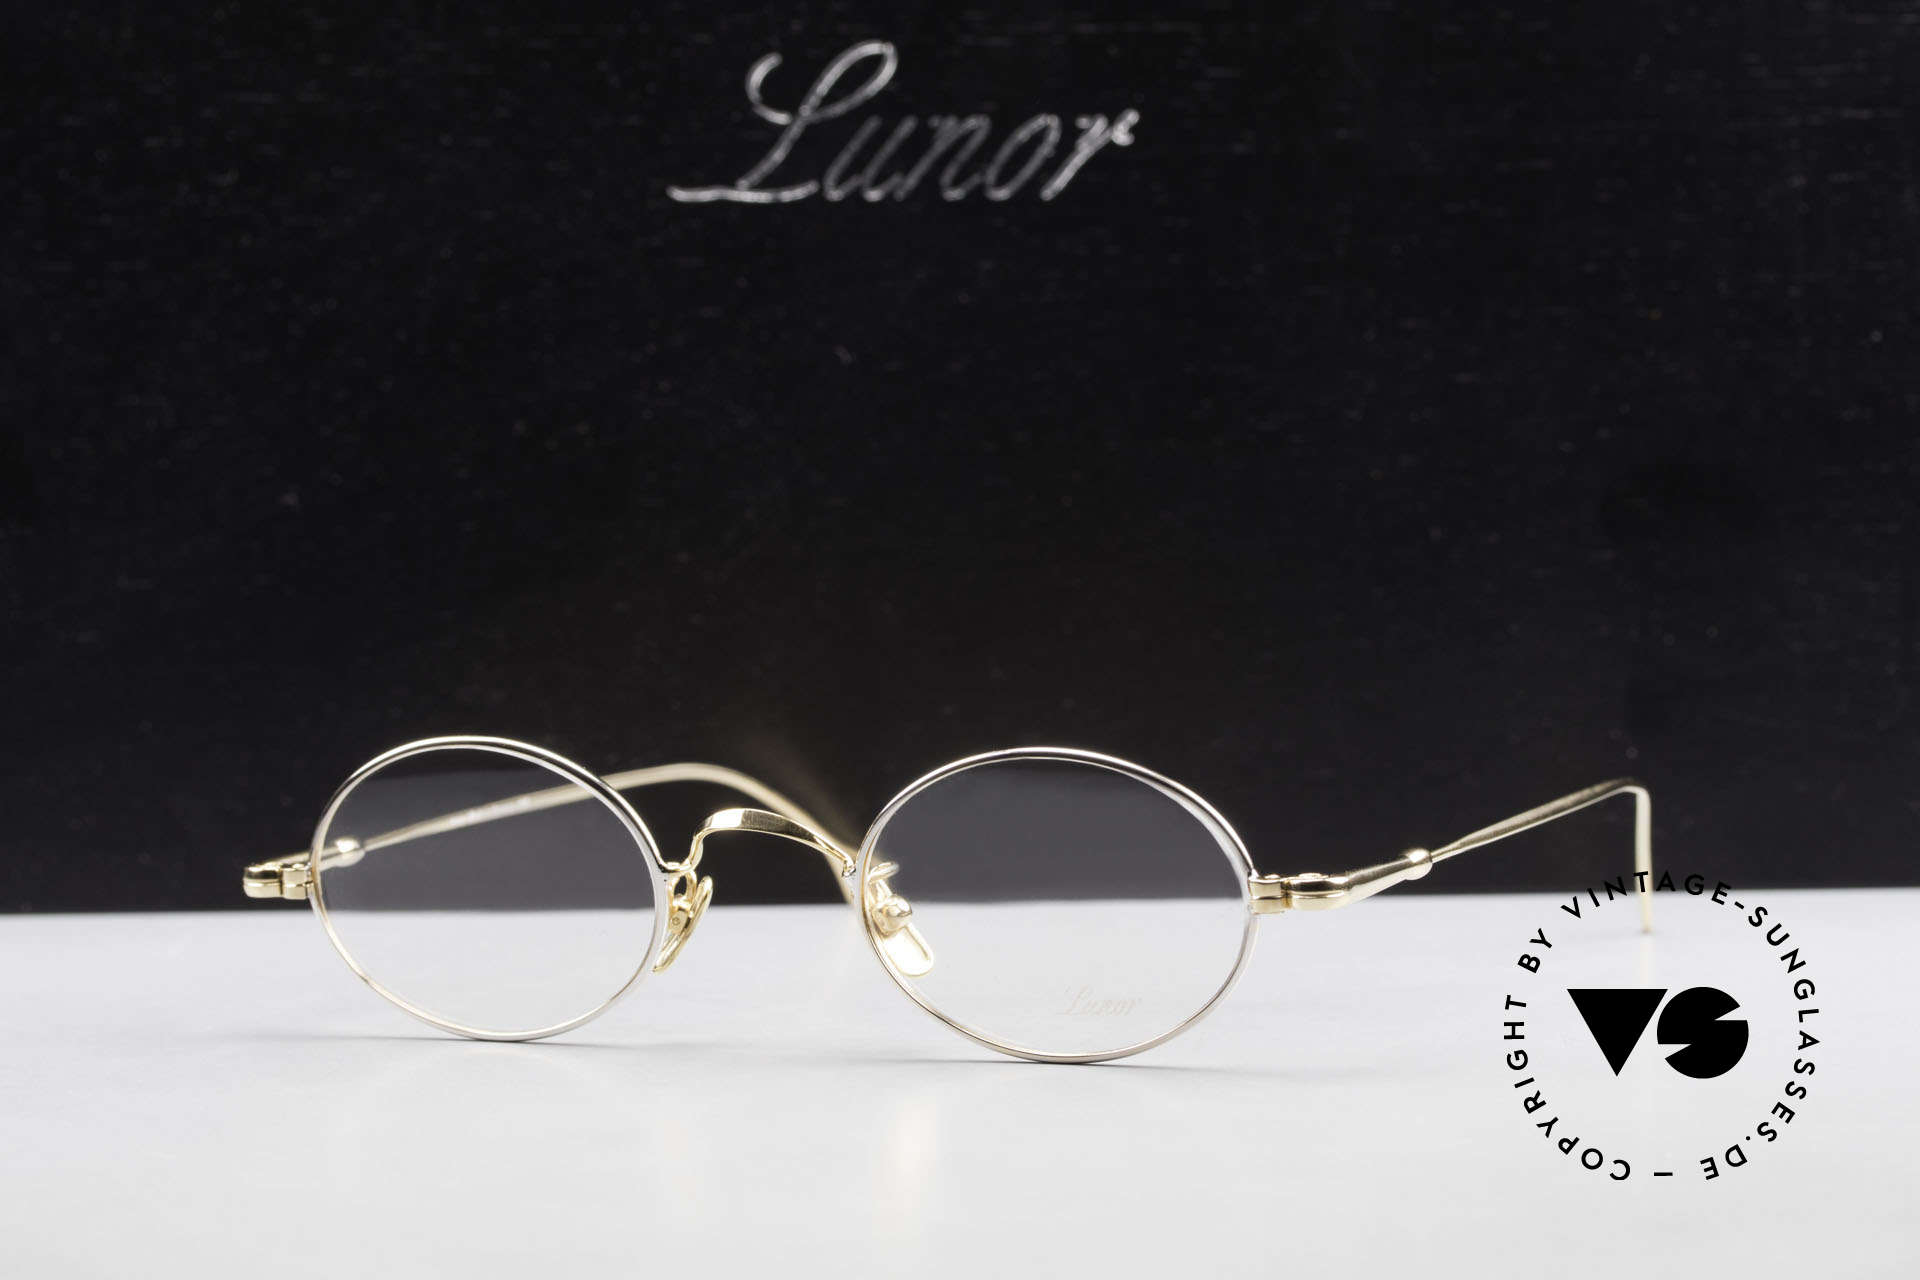 Lunor V 100 Oval Vintage Glasses Bicolor, Size: medium, Made for Men and Women